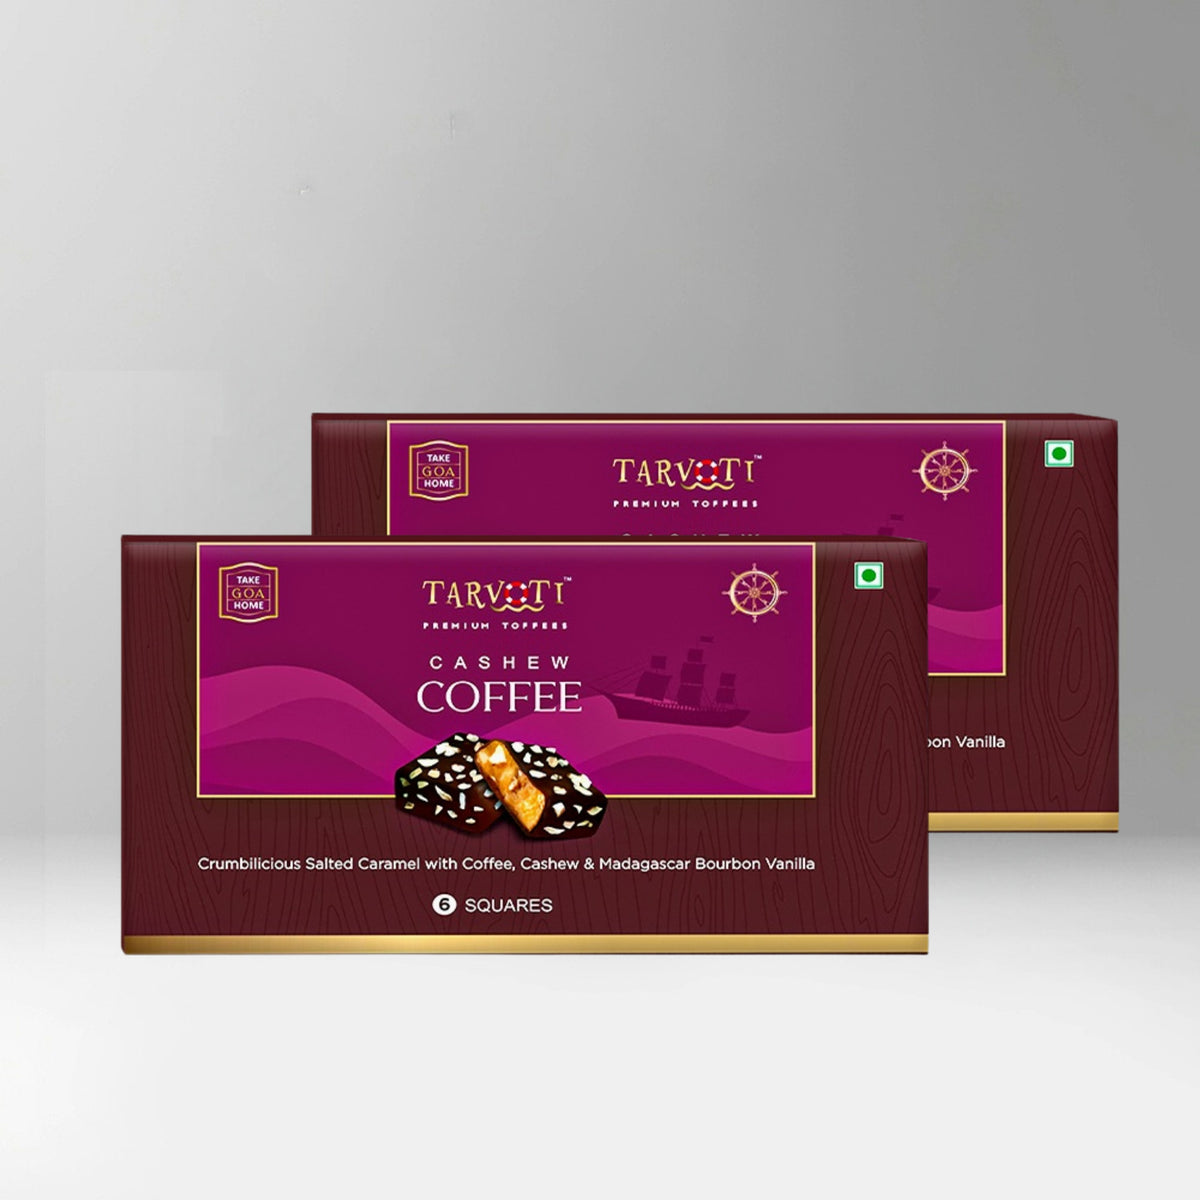 TARVOTI Premium Toffee- Coffee Cashew | 6units pouch x 2pcs x 48g each